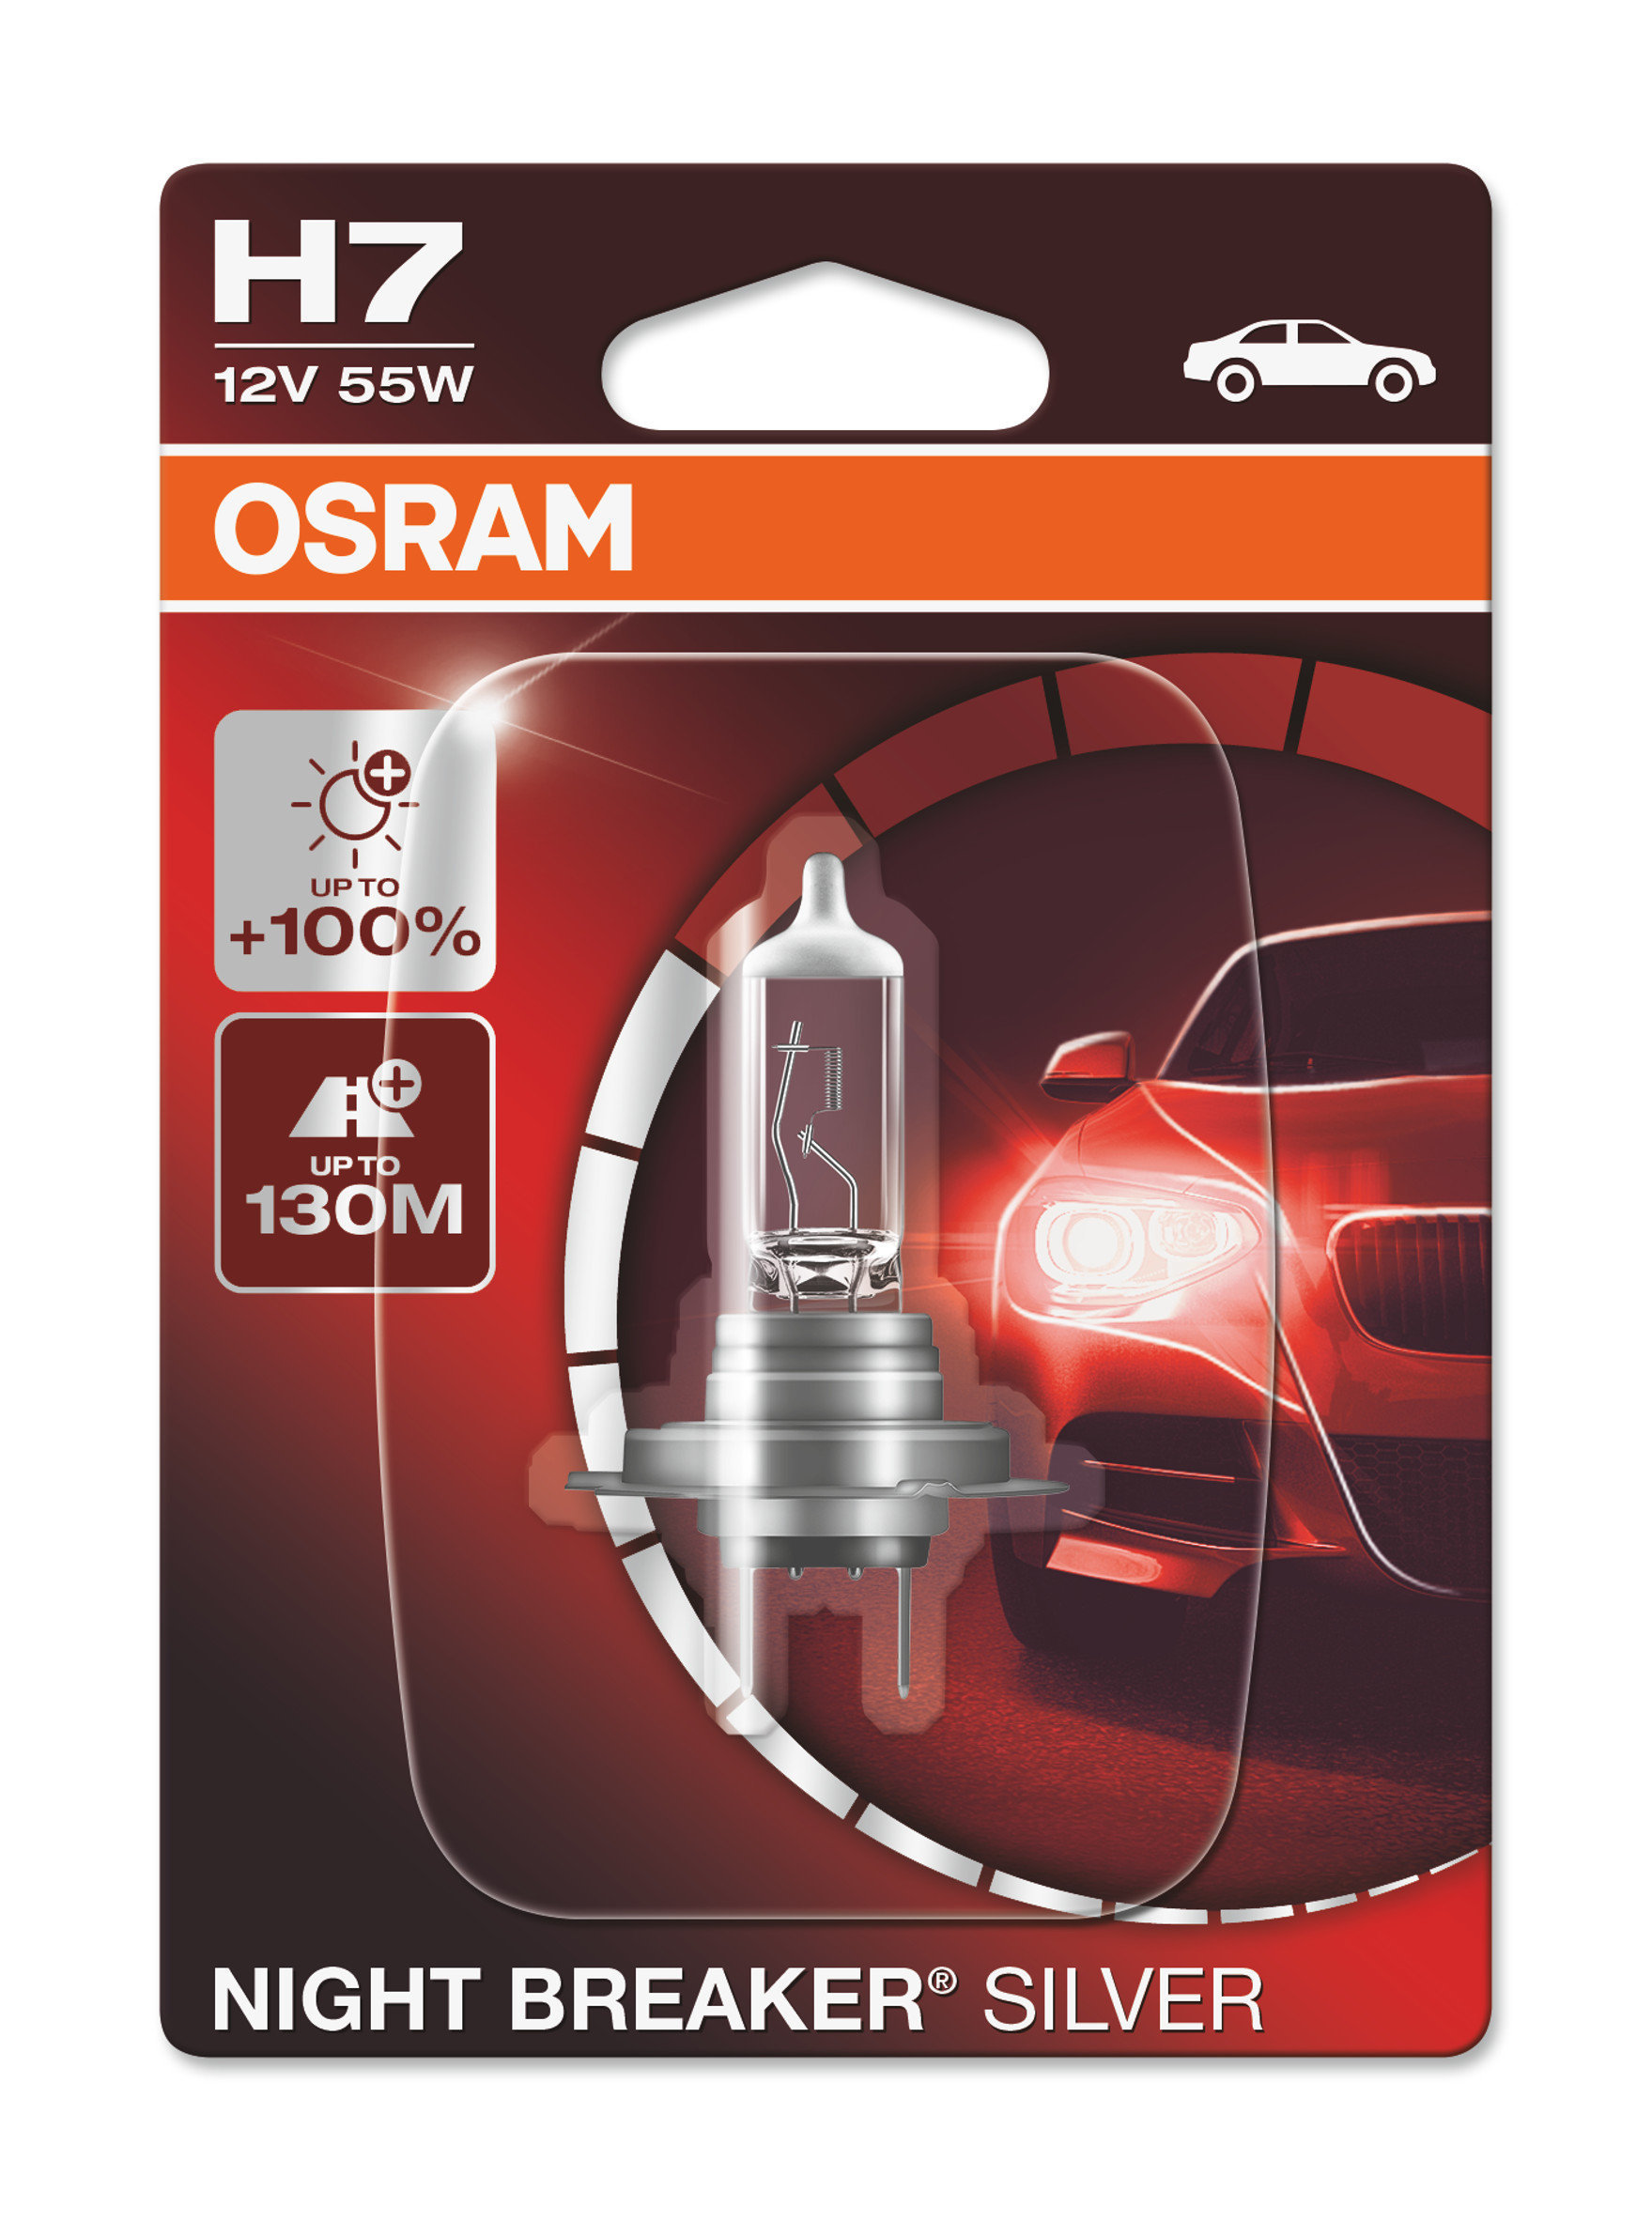 Osram Night Breaker Silver 55w headlight bulbs, H7 